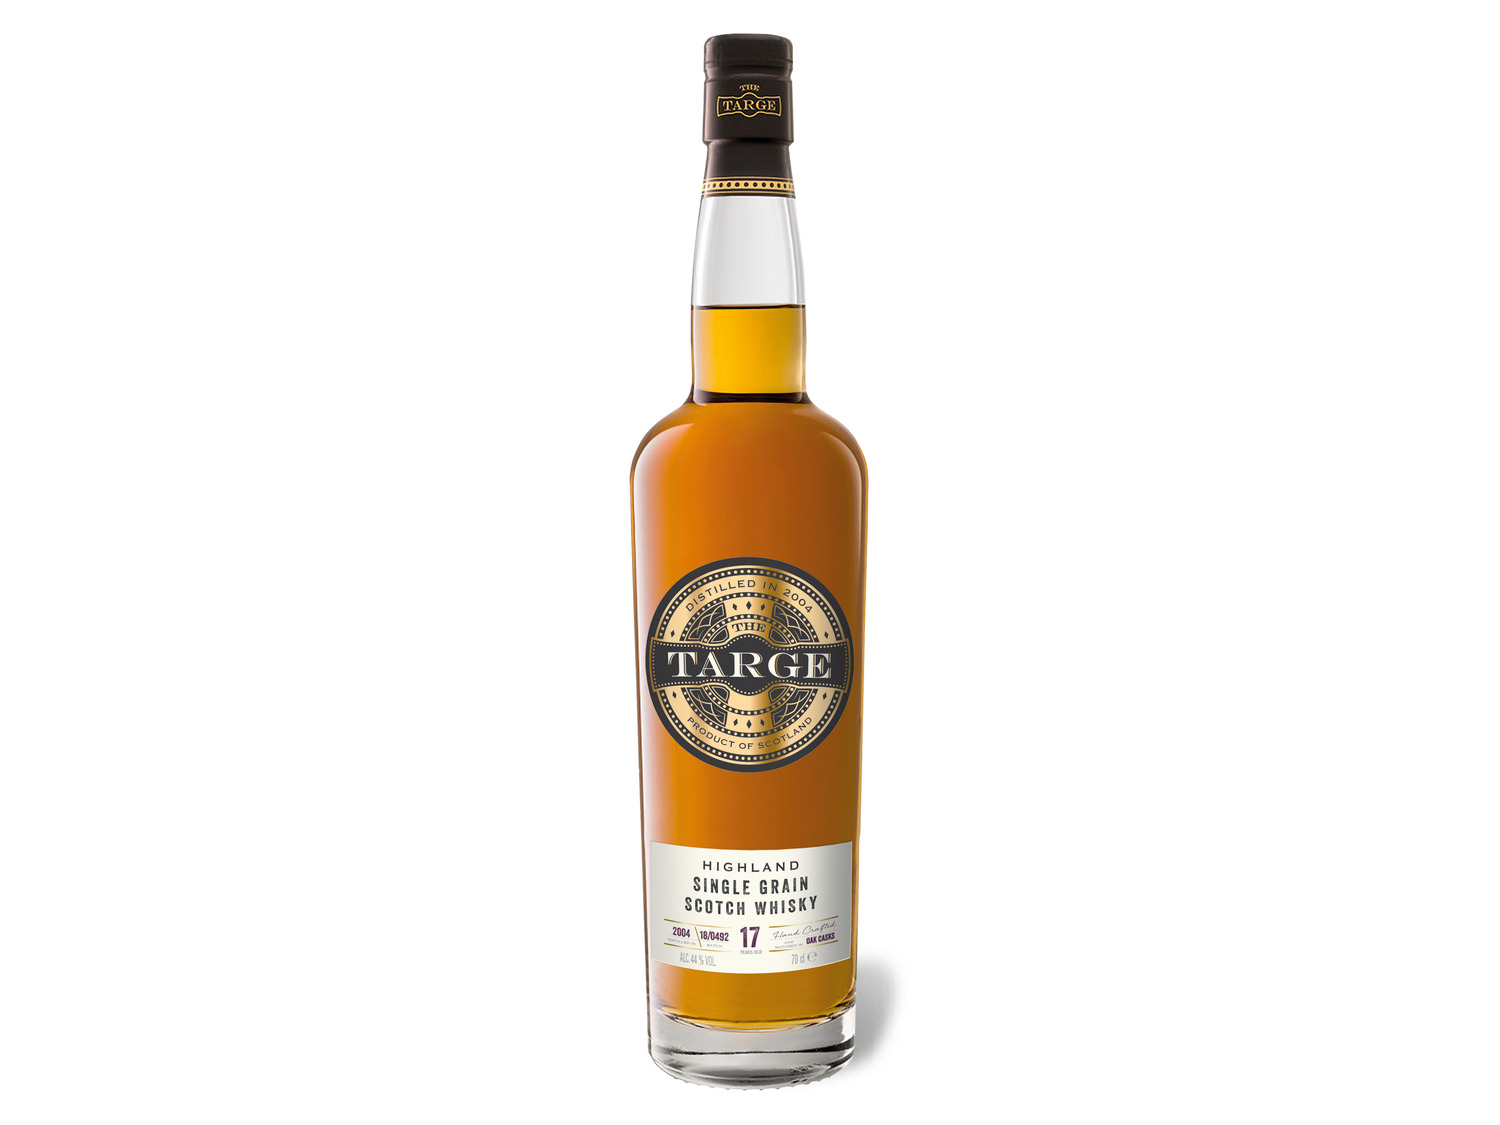 The Targe Highland Single Grain Scotch Whisky 17 Jahre…